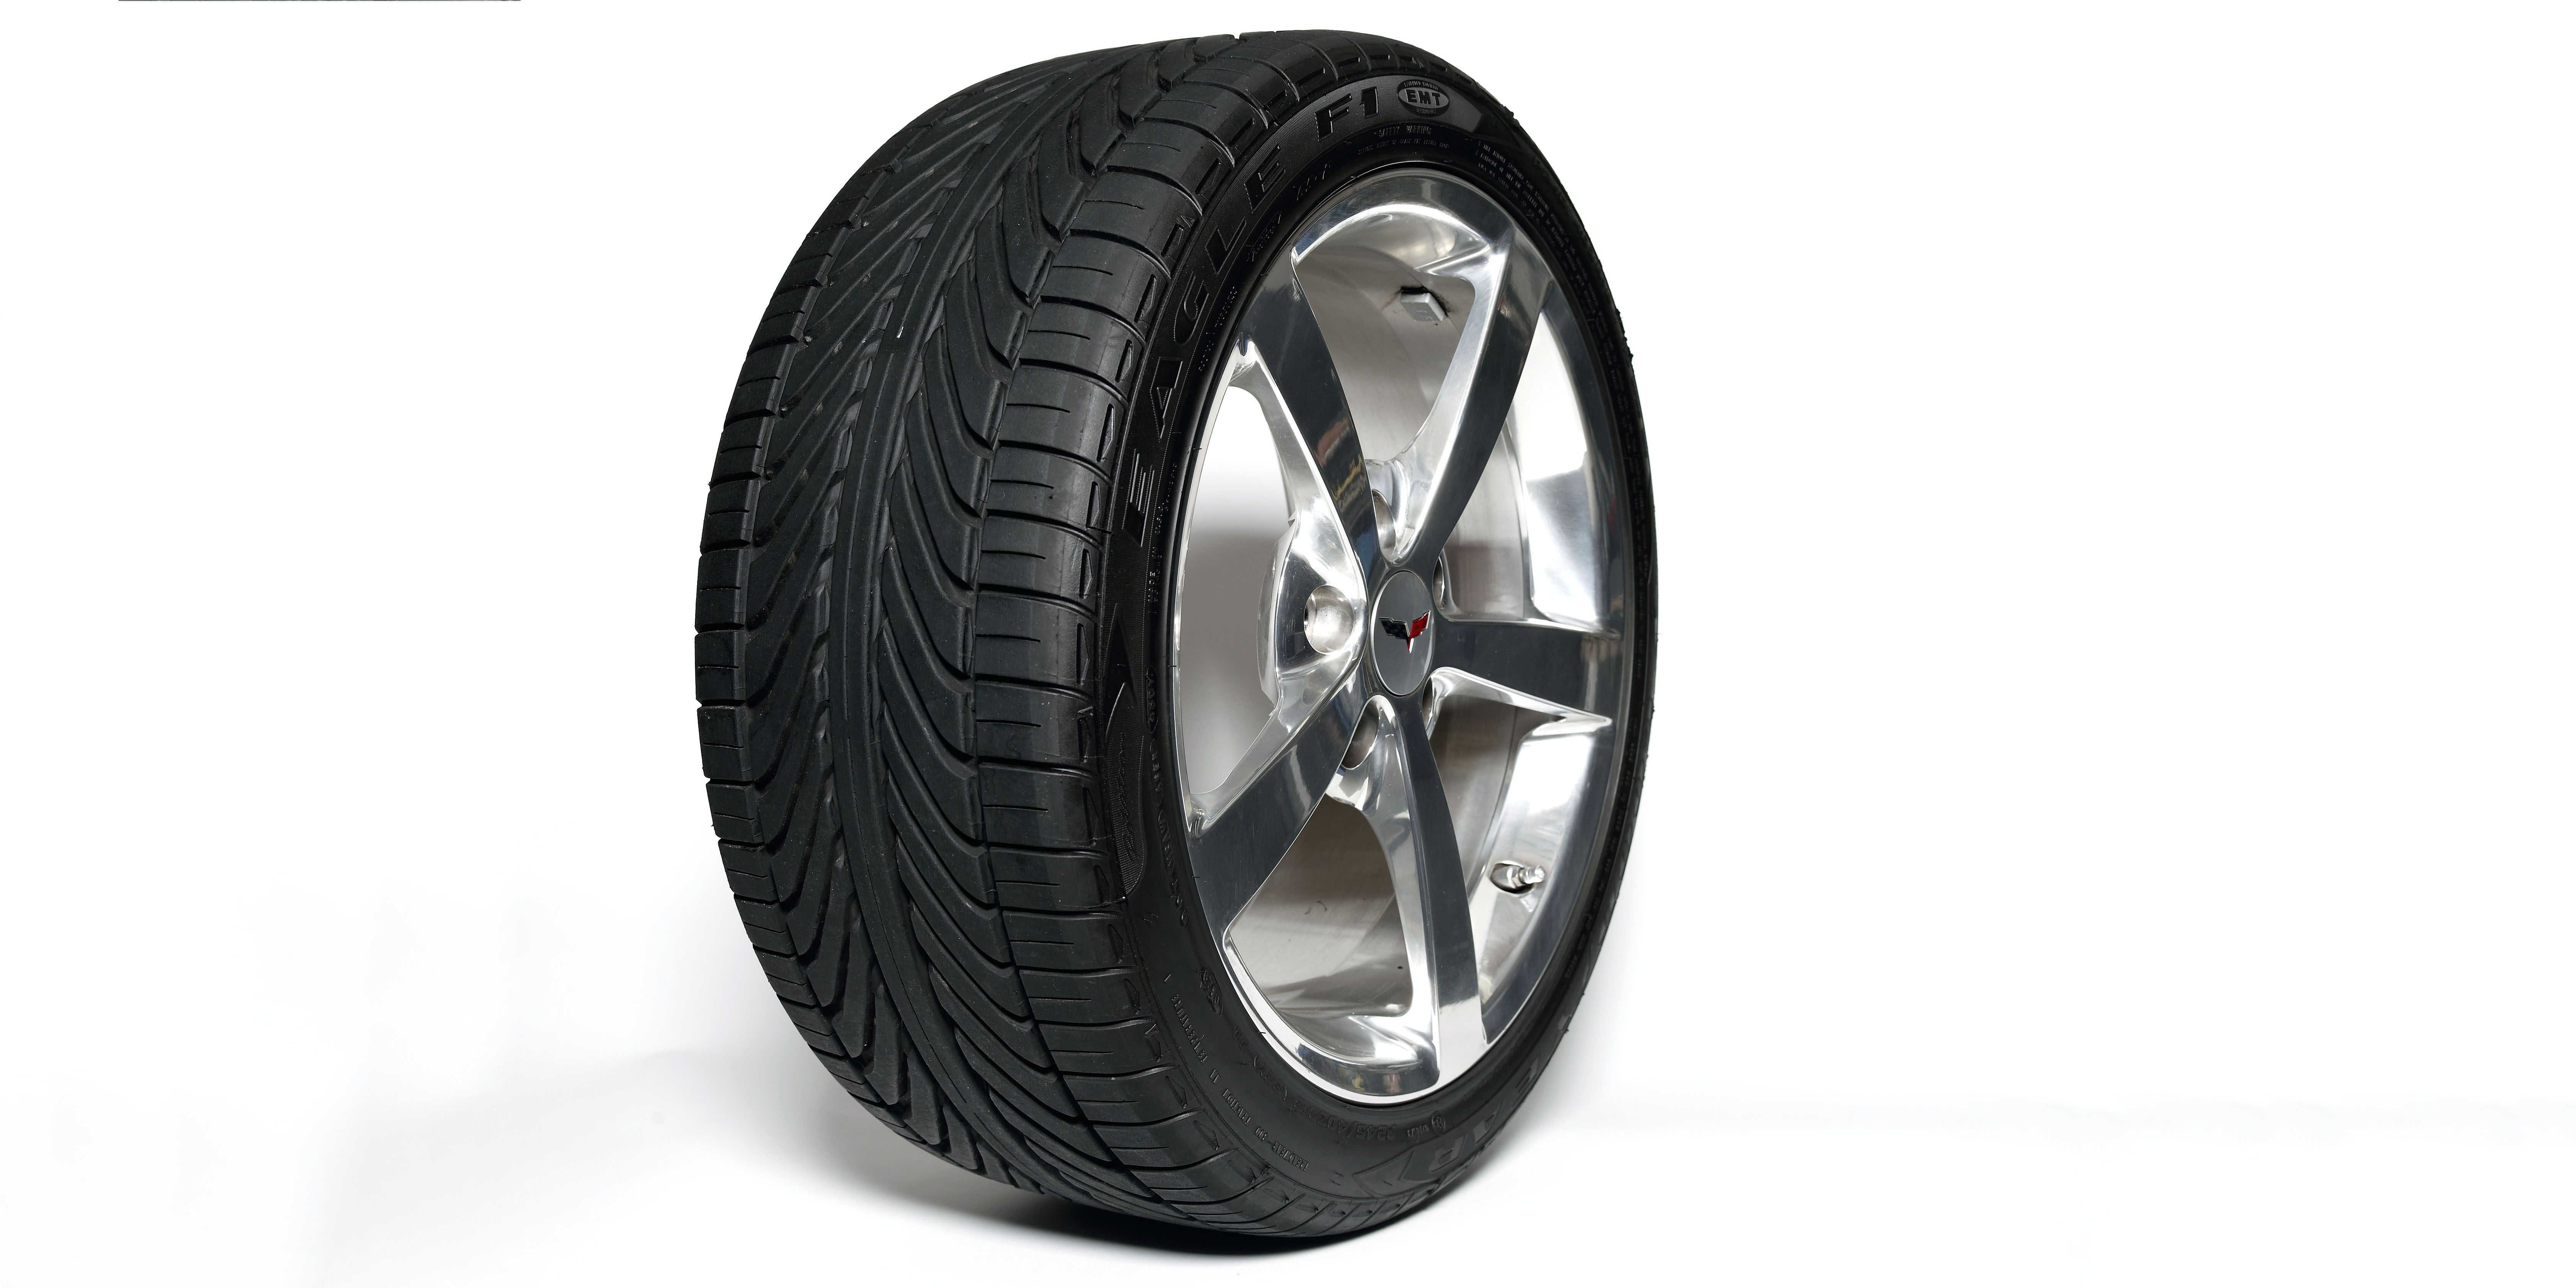 New Wheels Used Tires Go Kart Wheels and Tires Pair Optional Wheel Hubs 